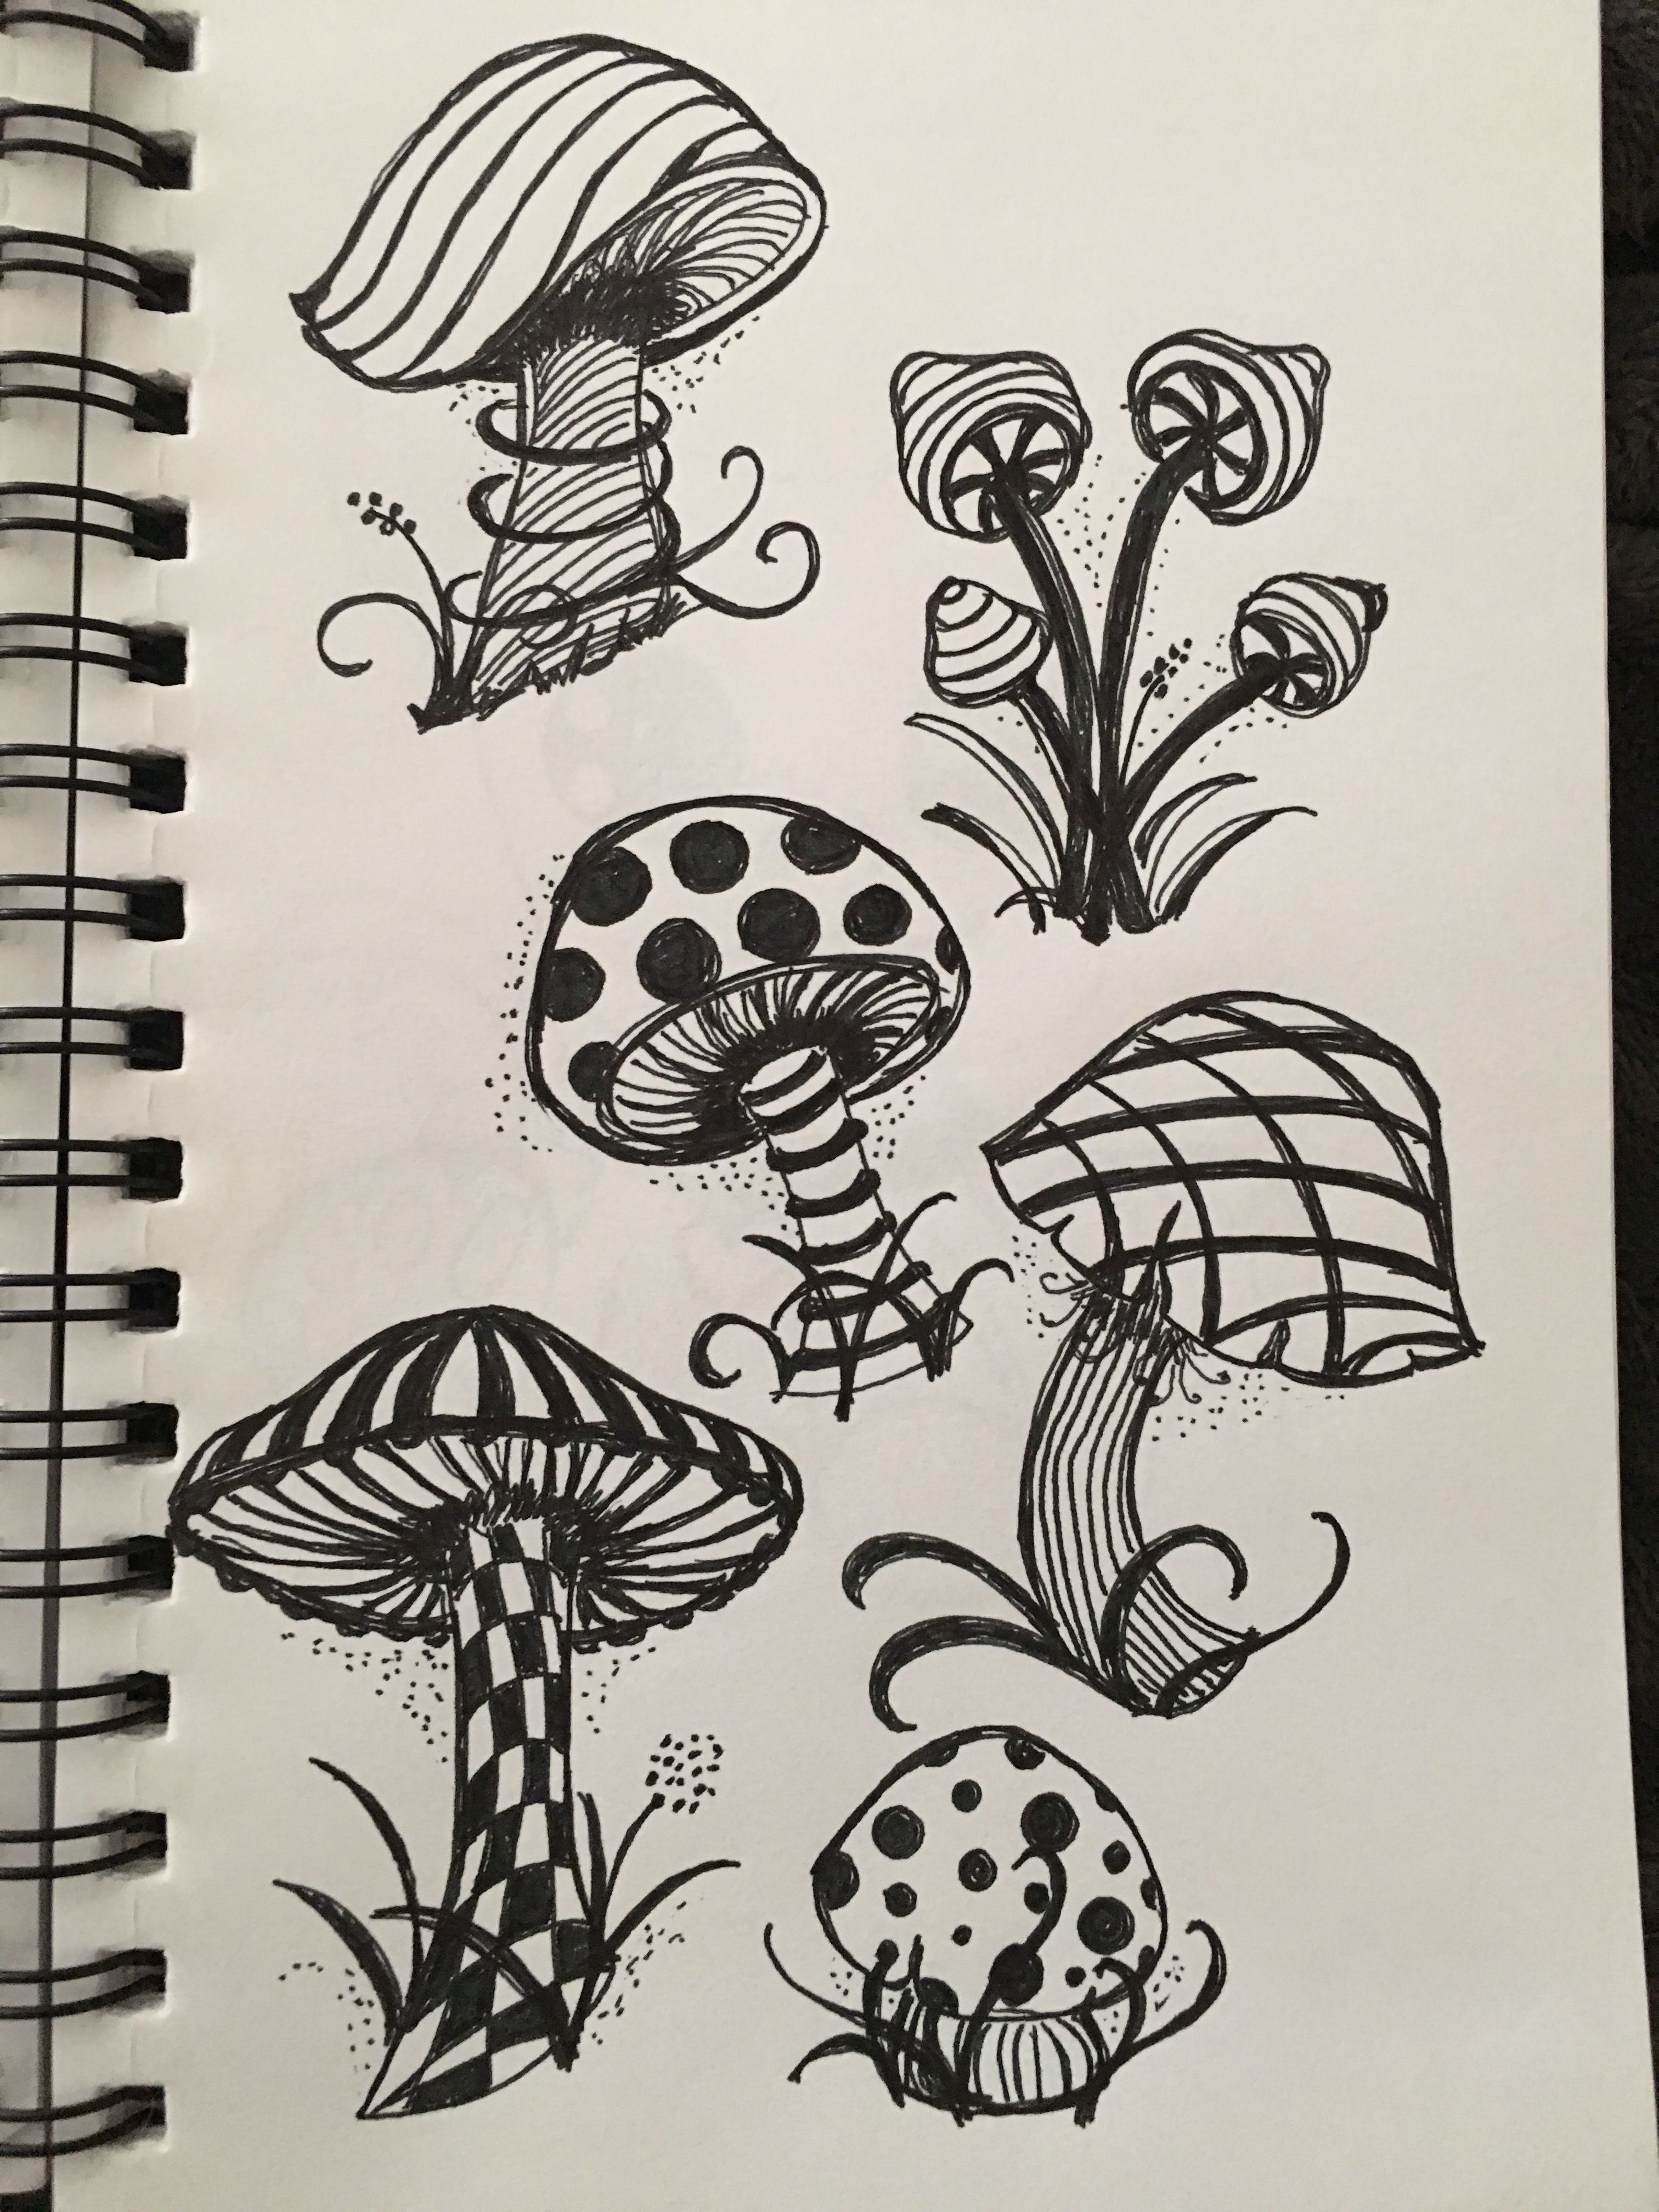 Mushroom Stoner Trippy Drawings Easy bmpharhar